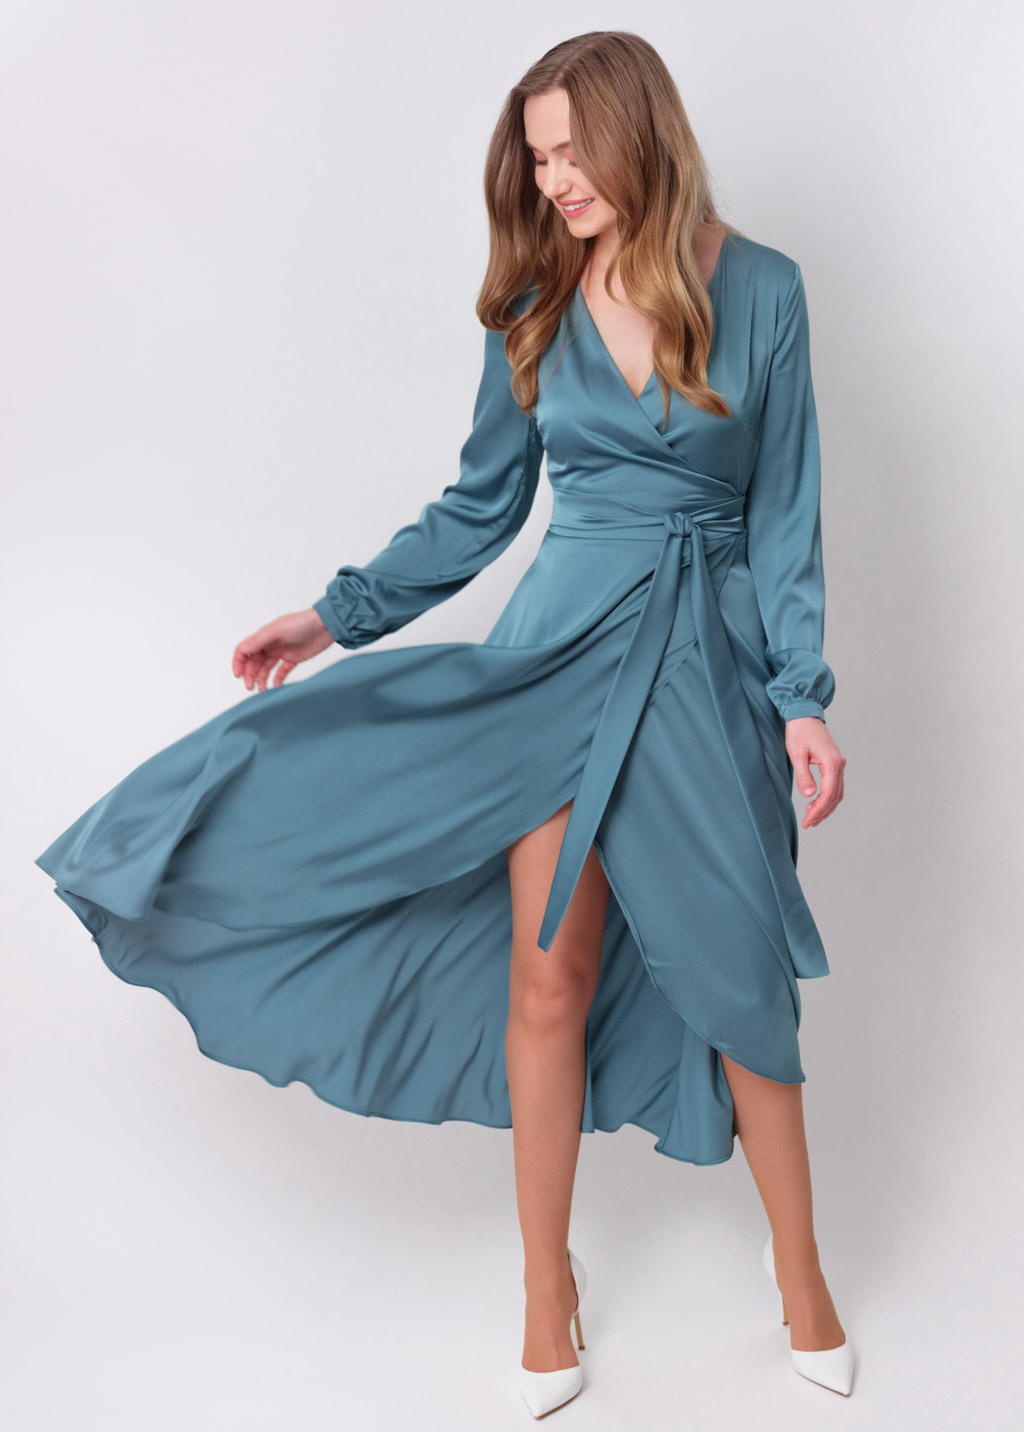 Aqua blue wrap dress